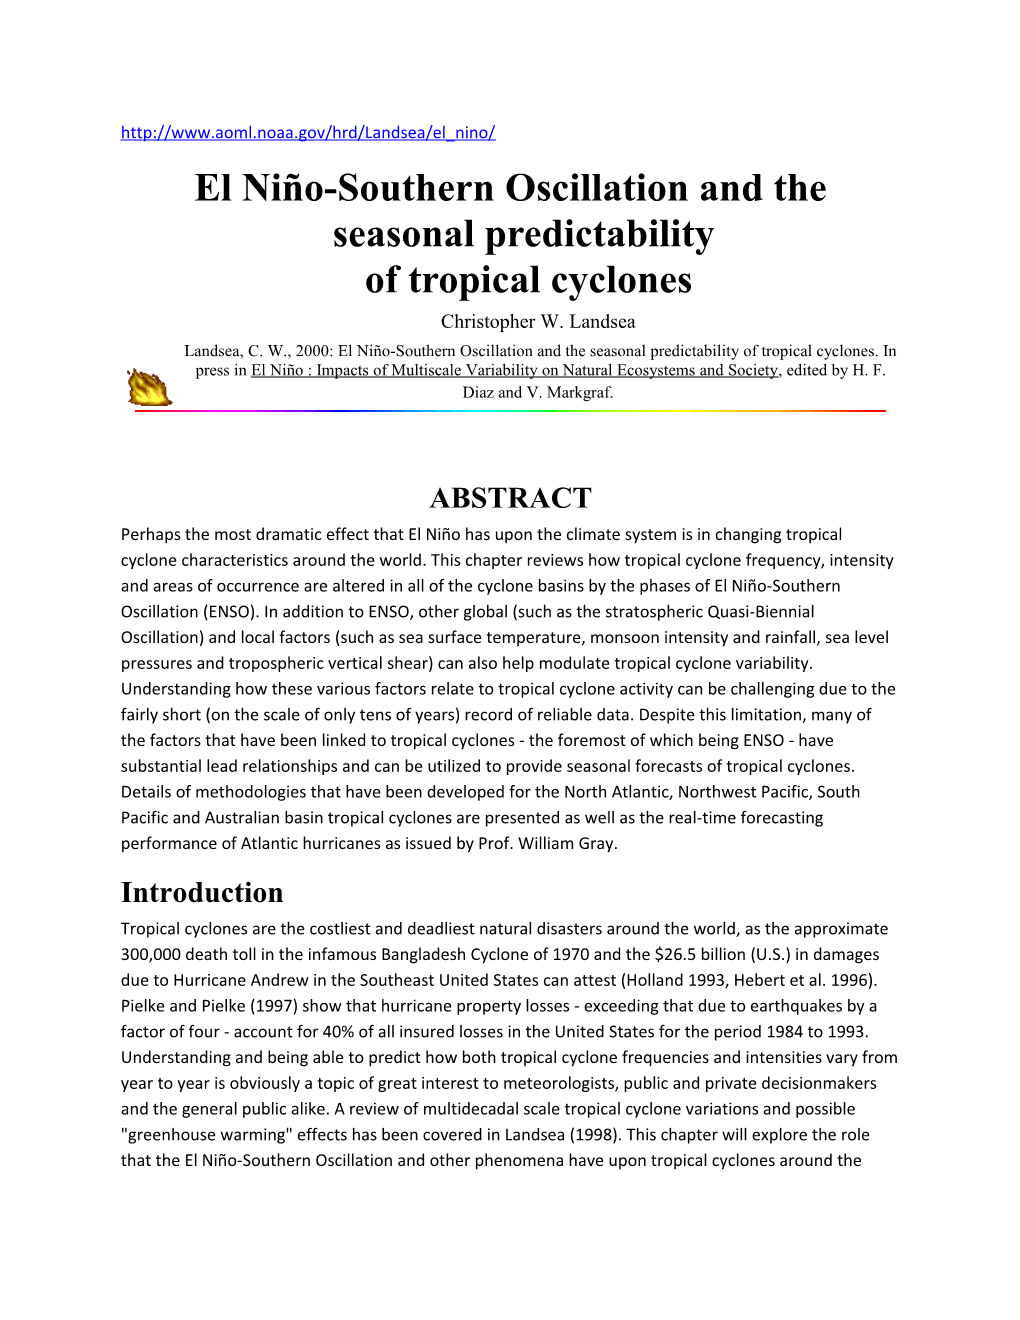 El Niño-Southern Oscillation and the Seasonal Predictabilityof Tropical Cyclones